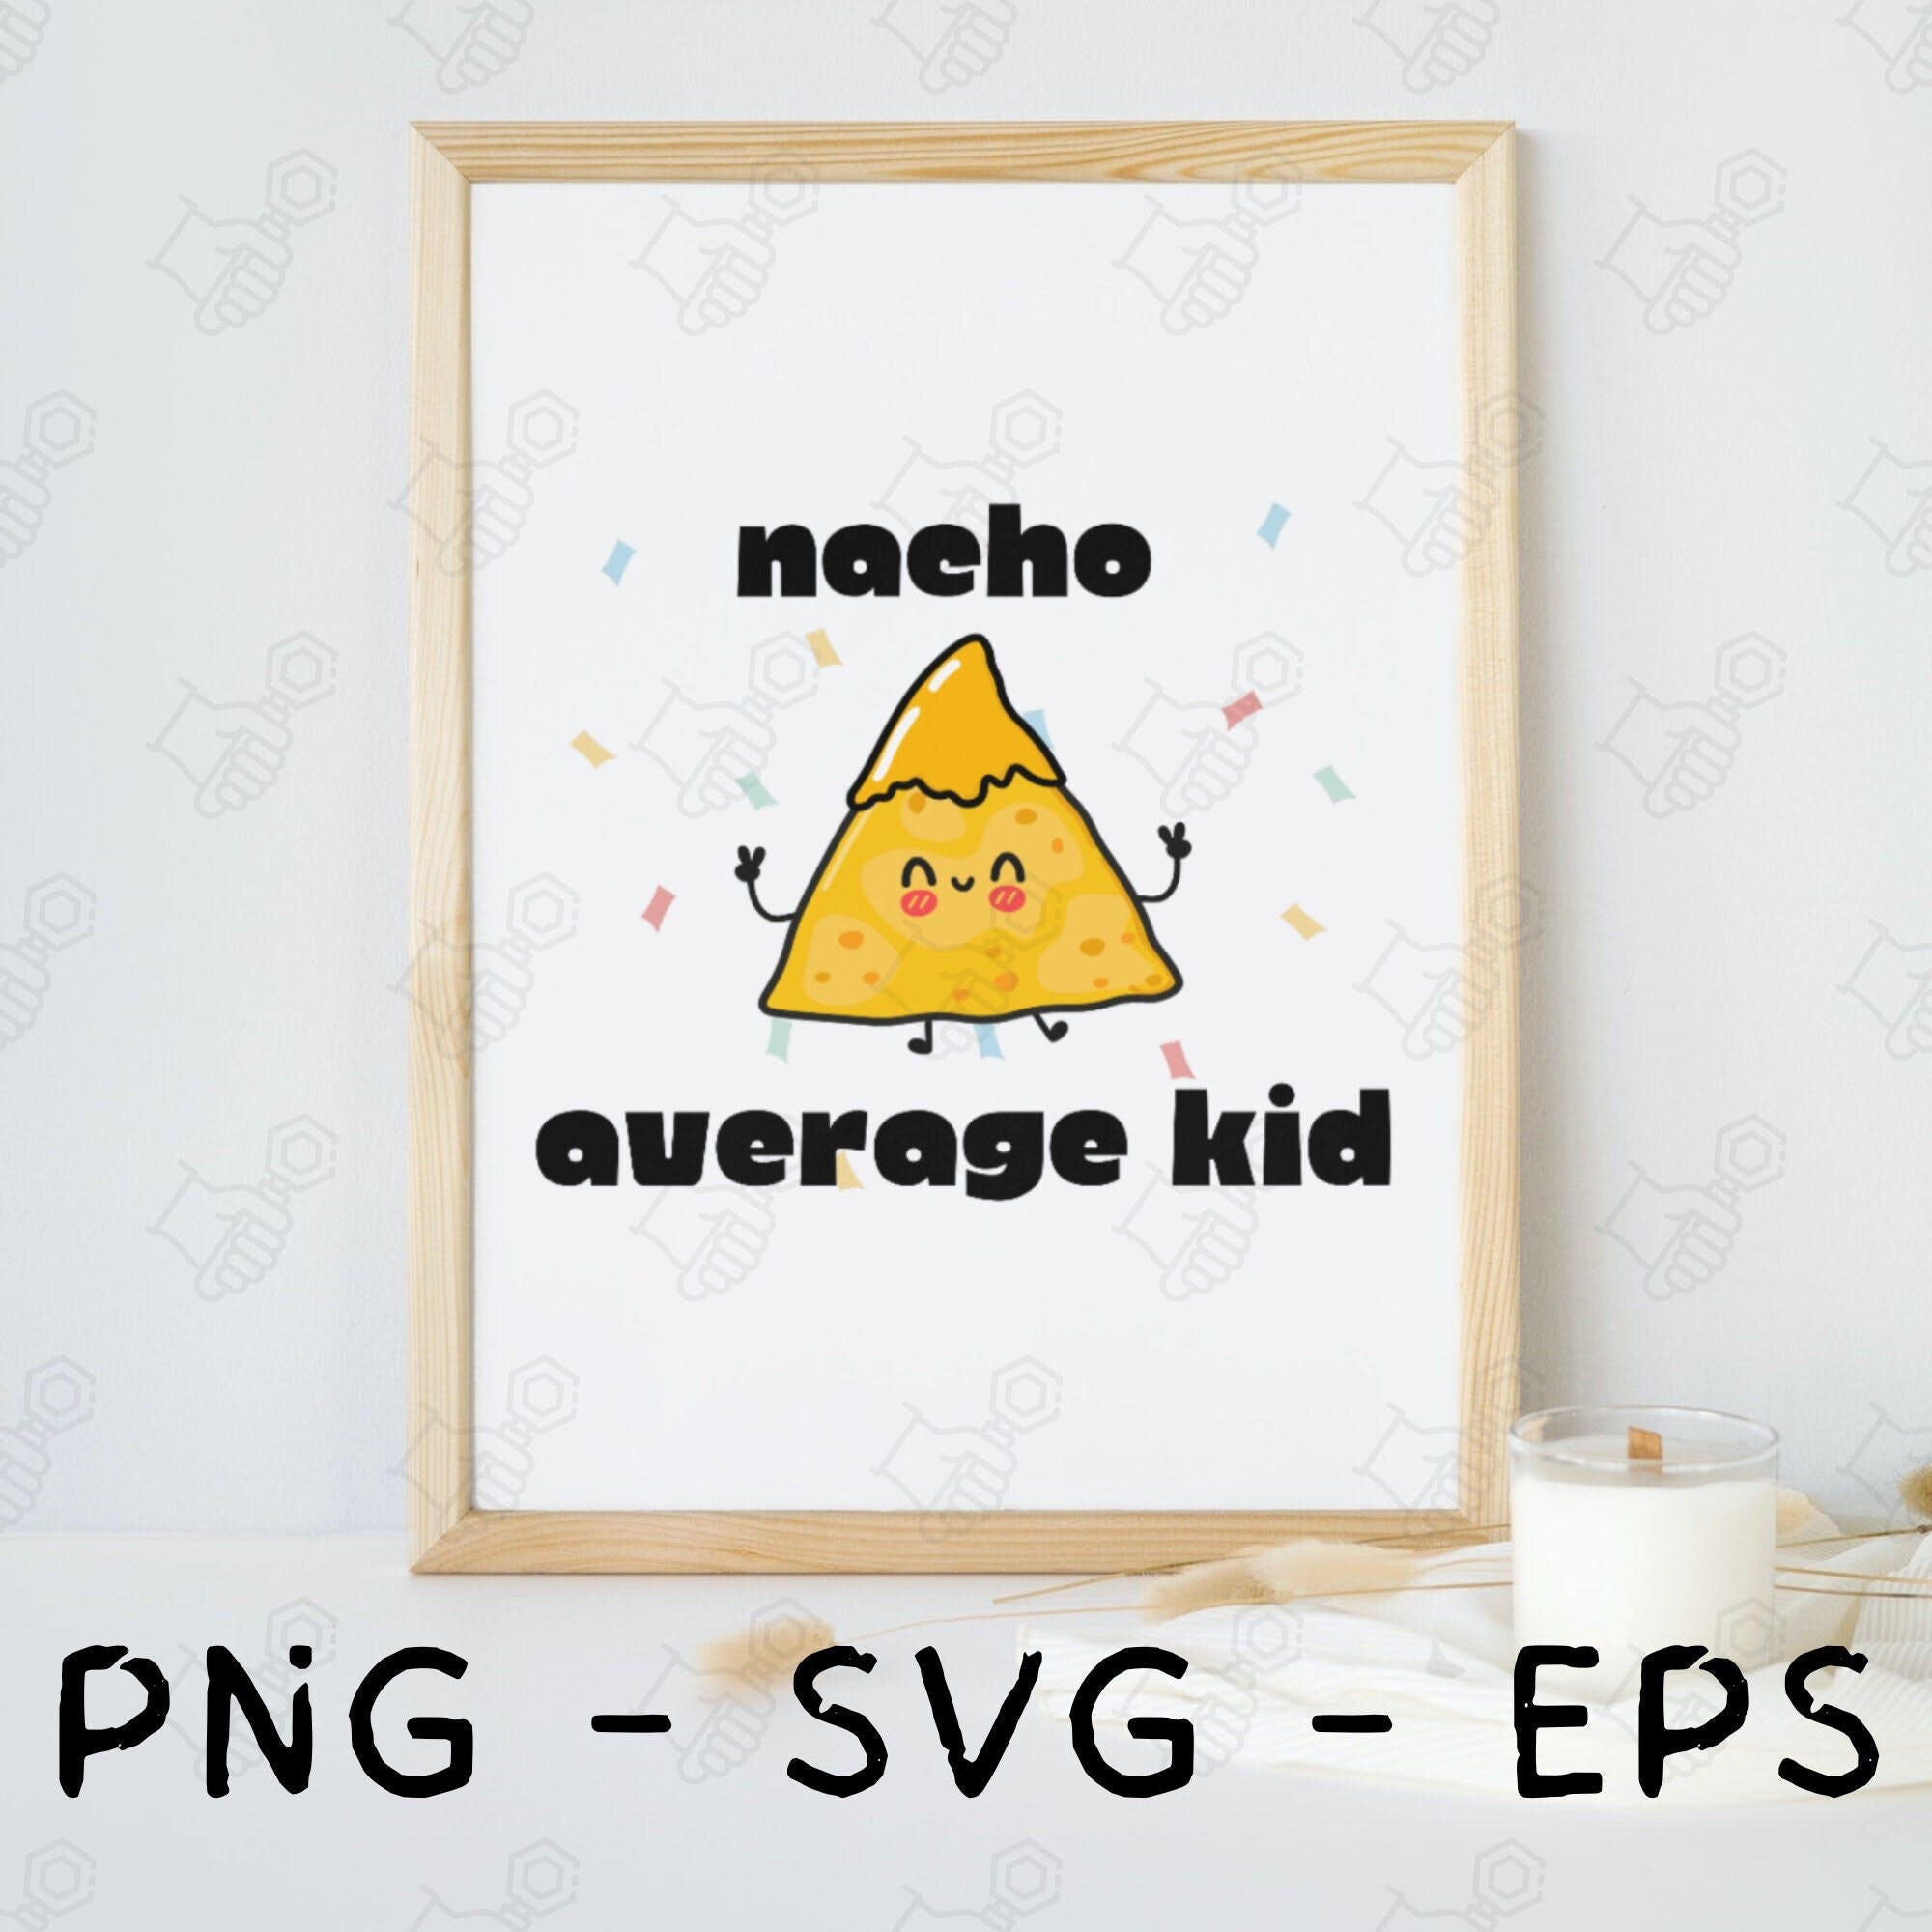 Nacho Average Kid PNG SVG EPS Clipart Files | Nacho Chip Funny svg png eps digital image | Funny kids tshirt print classroom bedroom svg eps